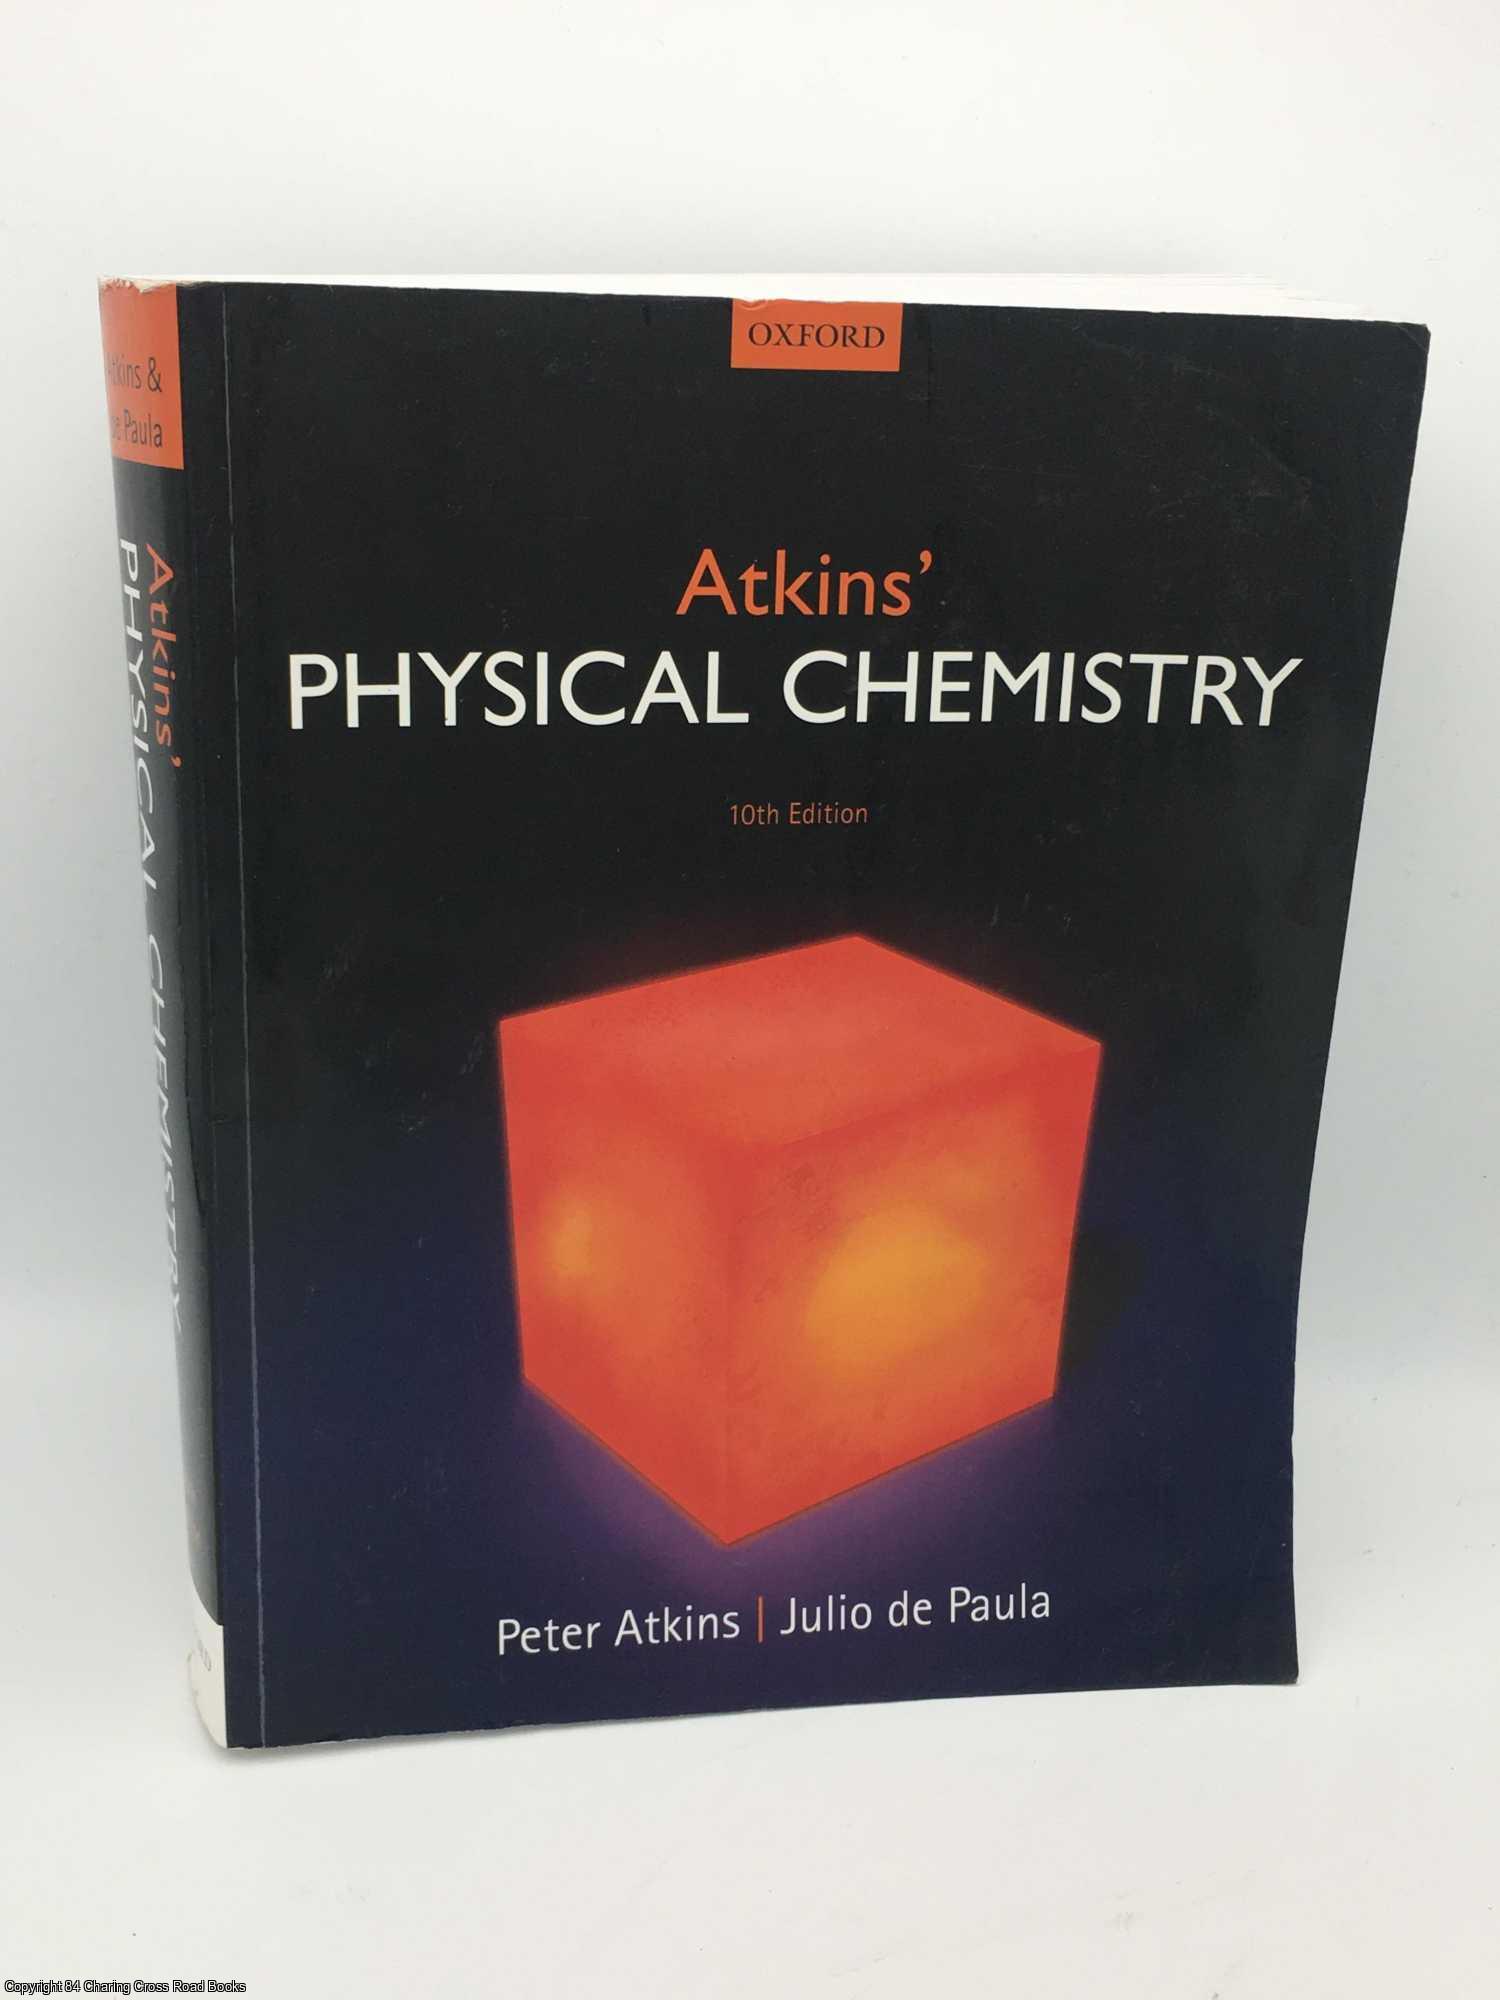 Atkins, Peter - Atkins' Physical Chemistry